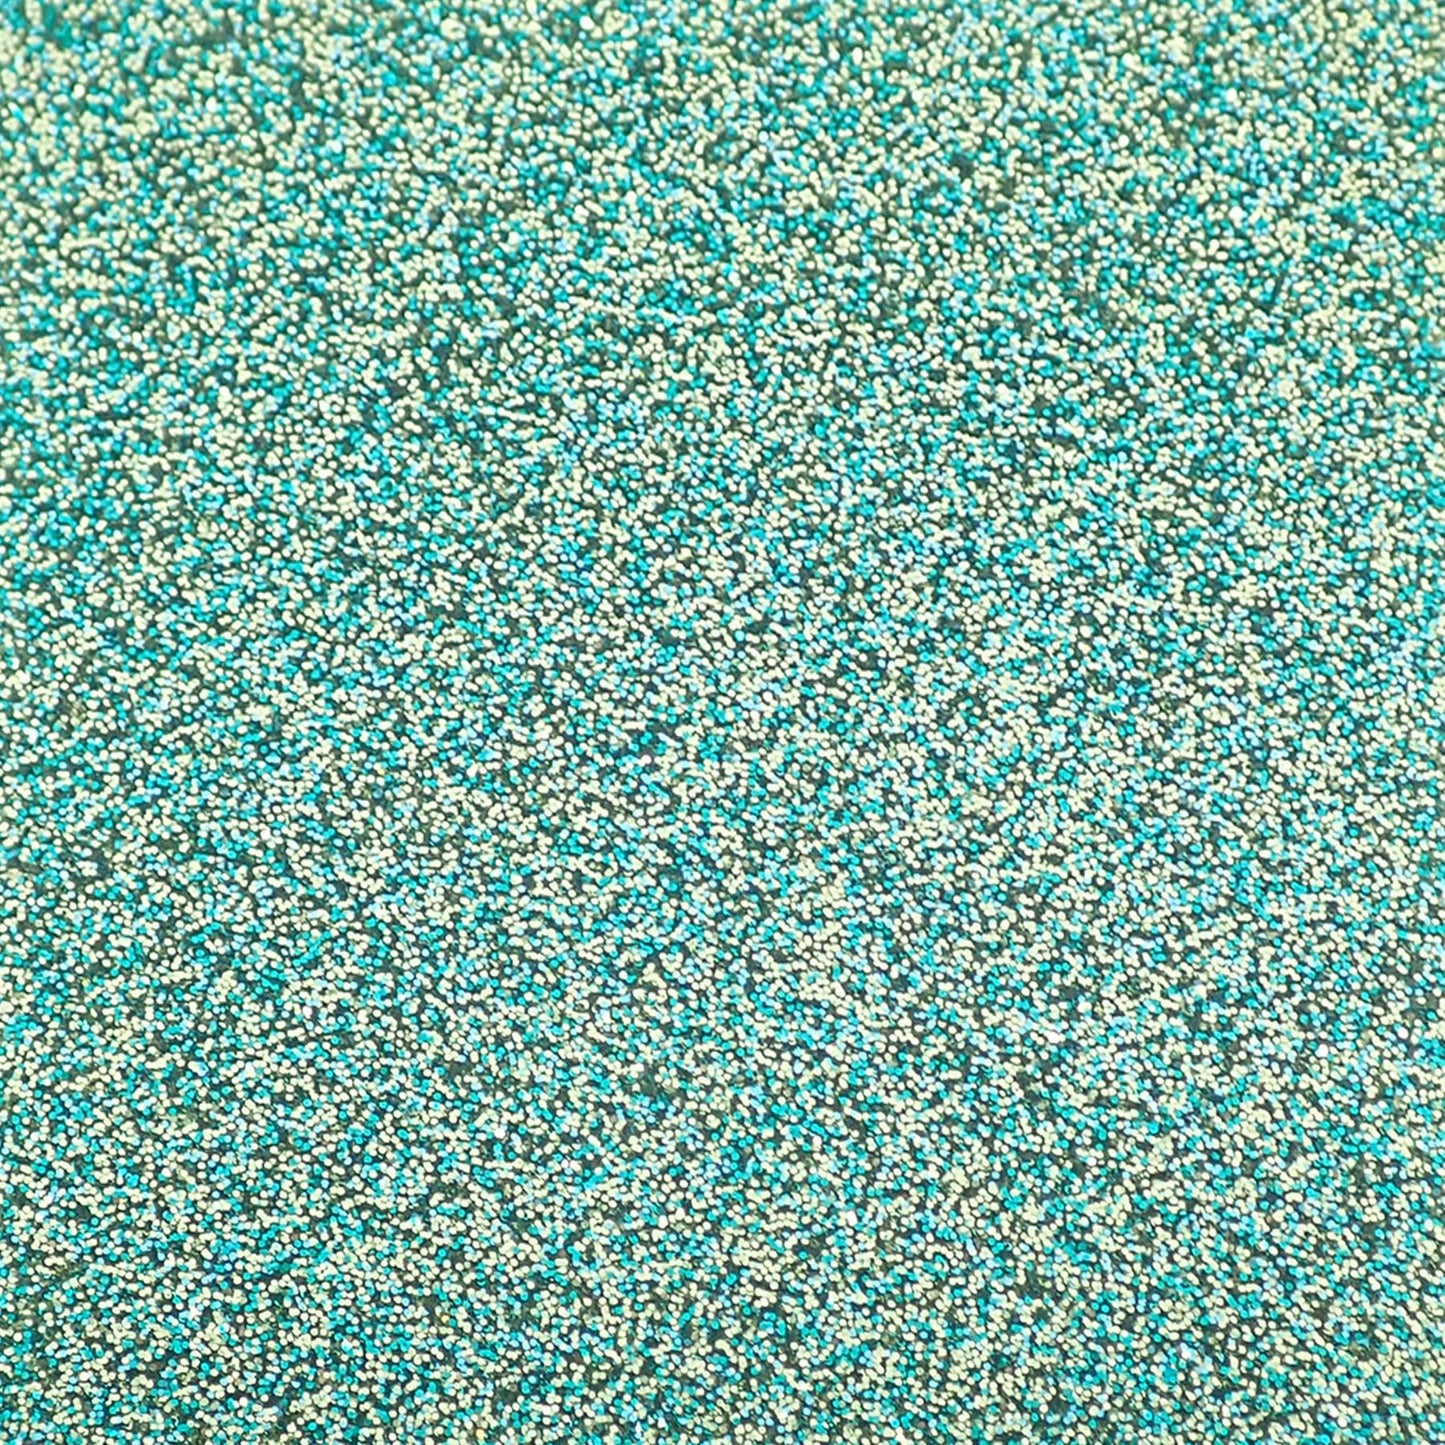 Incudo Grass Green 2-Sided Glitter Acrylic Sheet - Sample